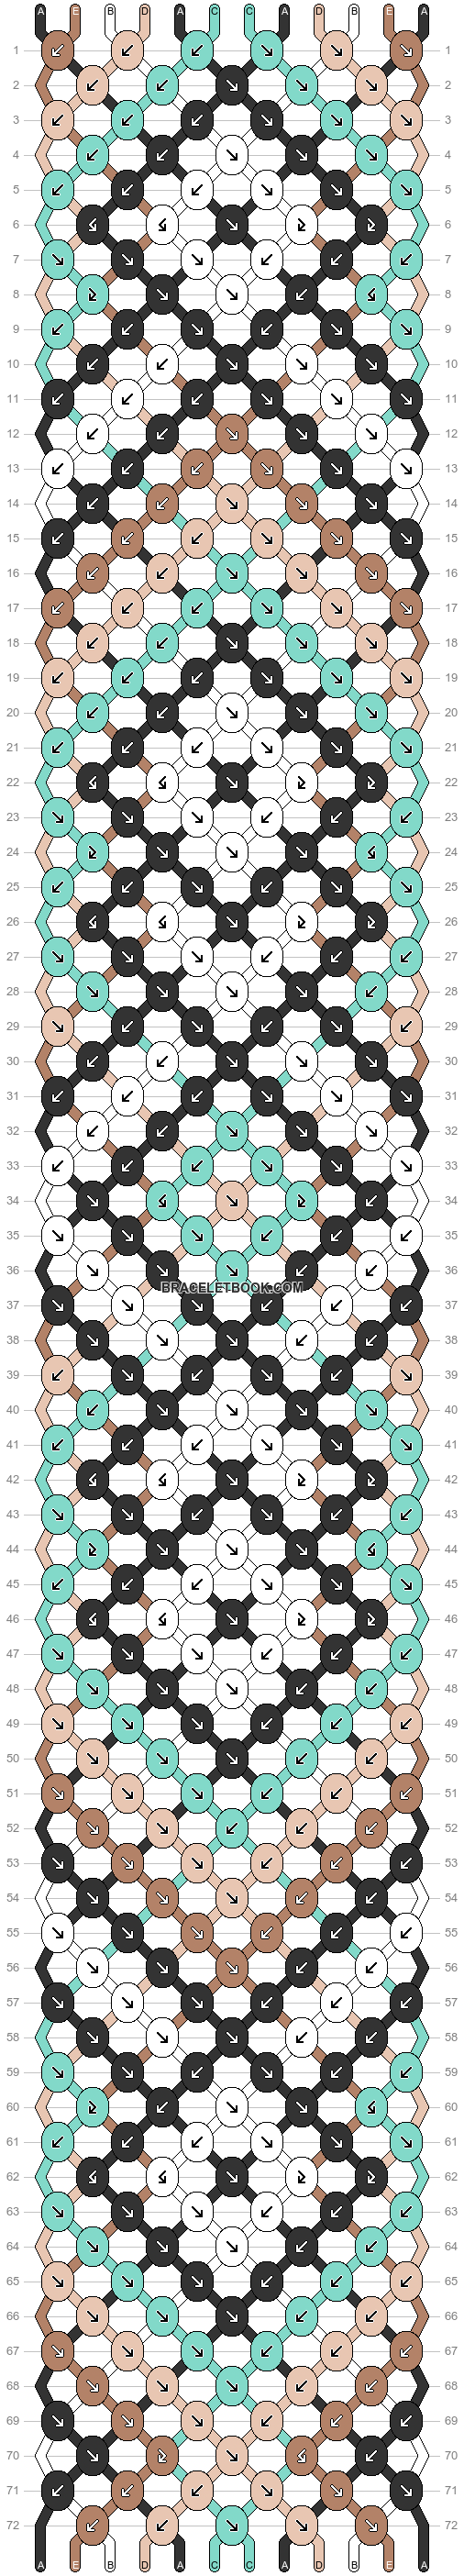 Normal pattern #68651 | BraceletBook